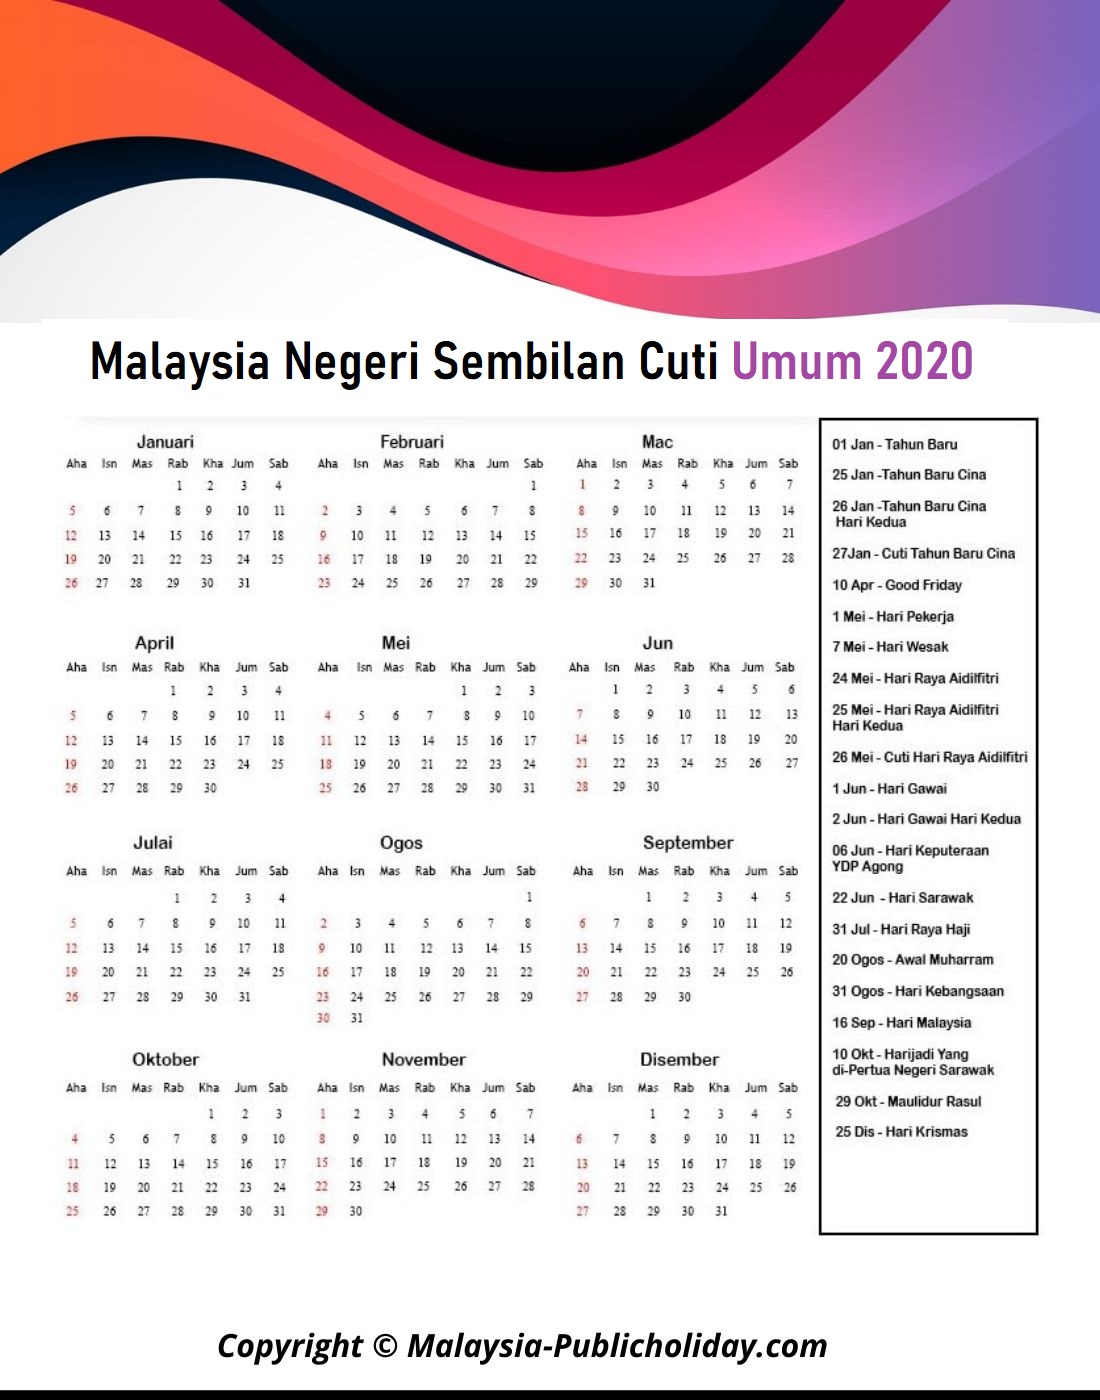 Negeri sembilan public holiday 2022